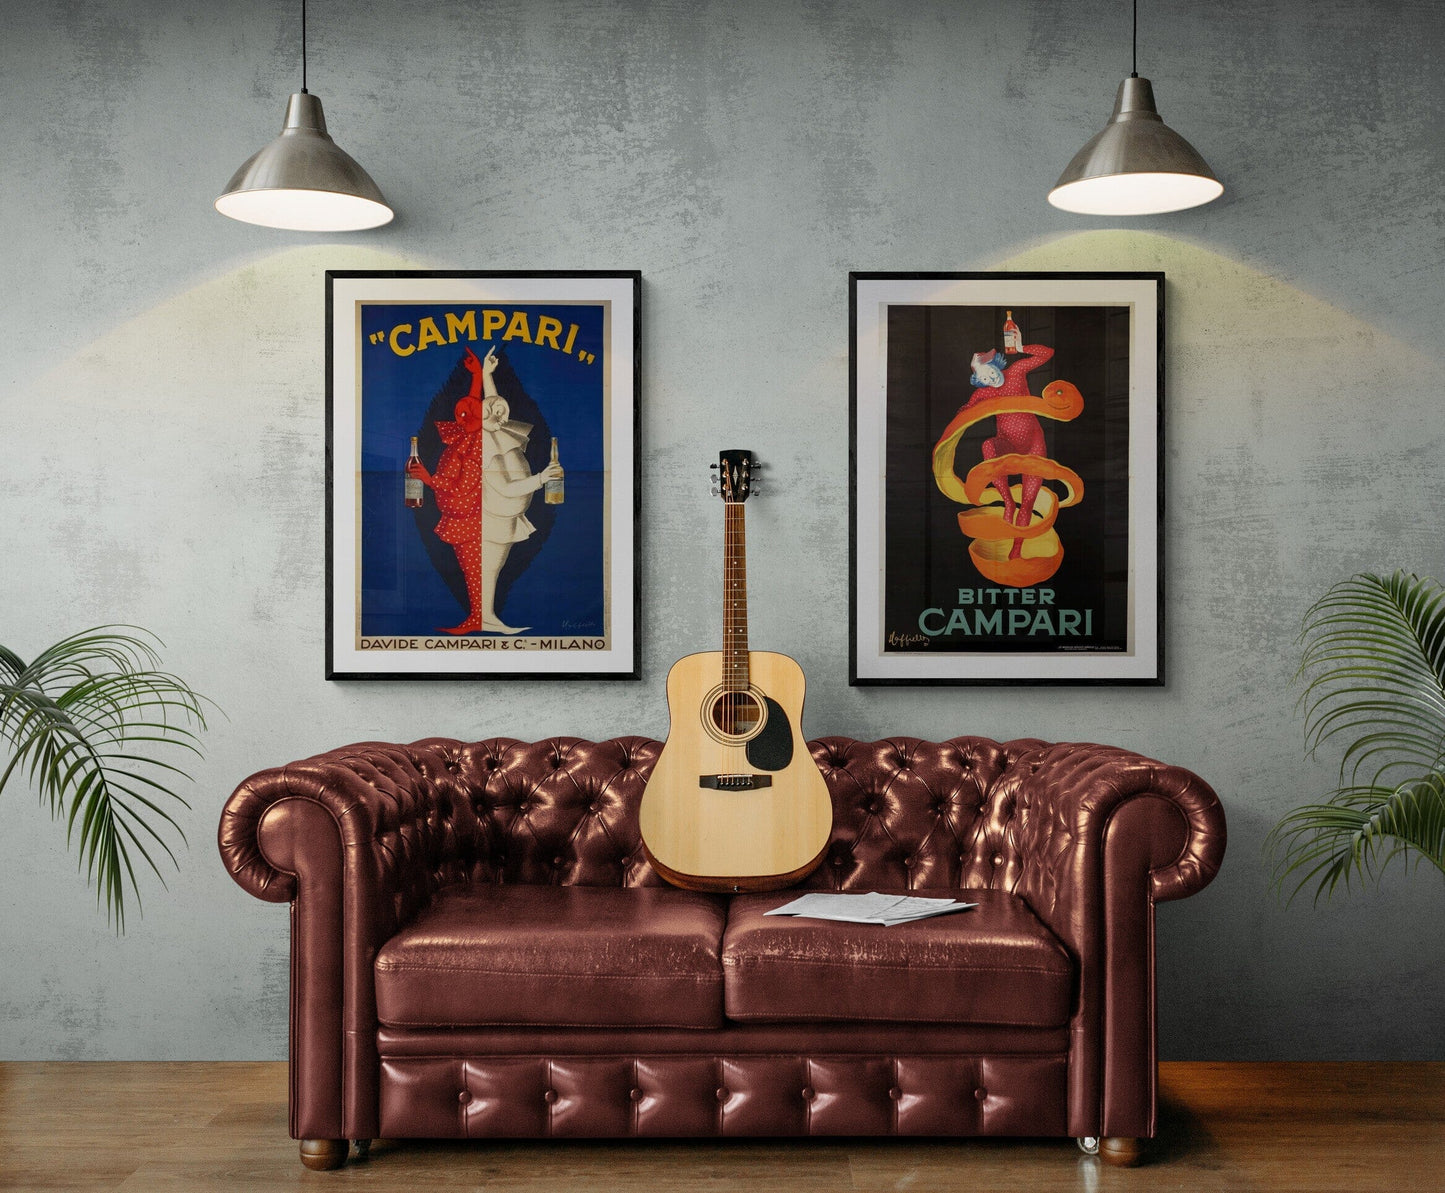 Vintage Campari Poster (1920s) | Cocktail posters | Leonetto Cappiello Posters, Prints, & Visual Artwork The Trumpet Shop   